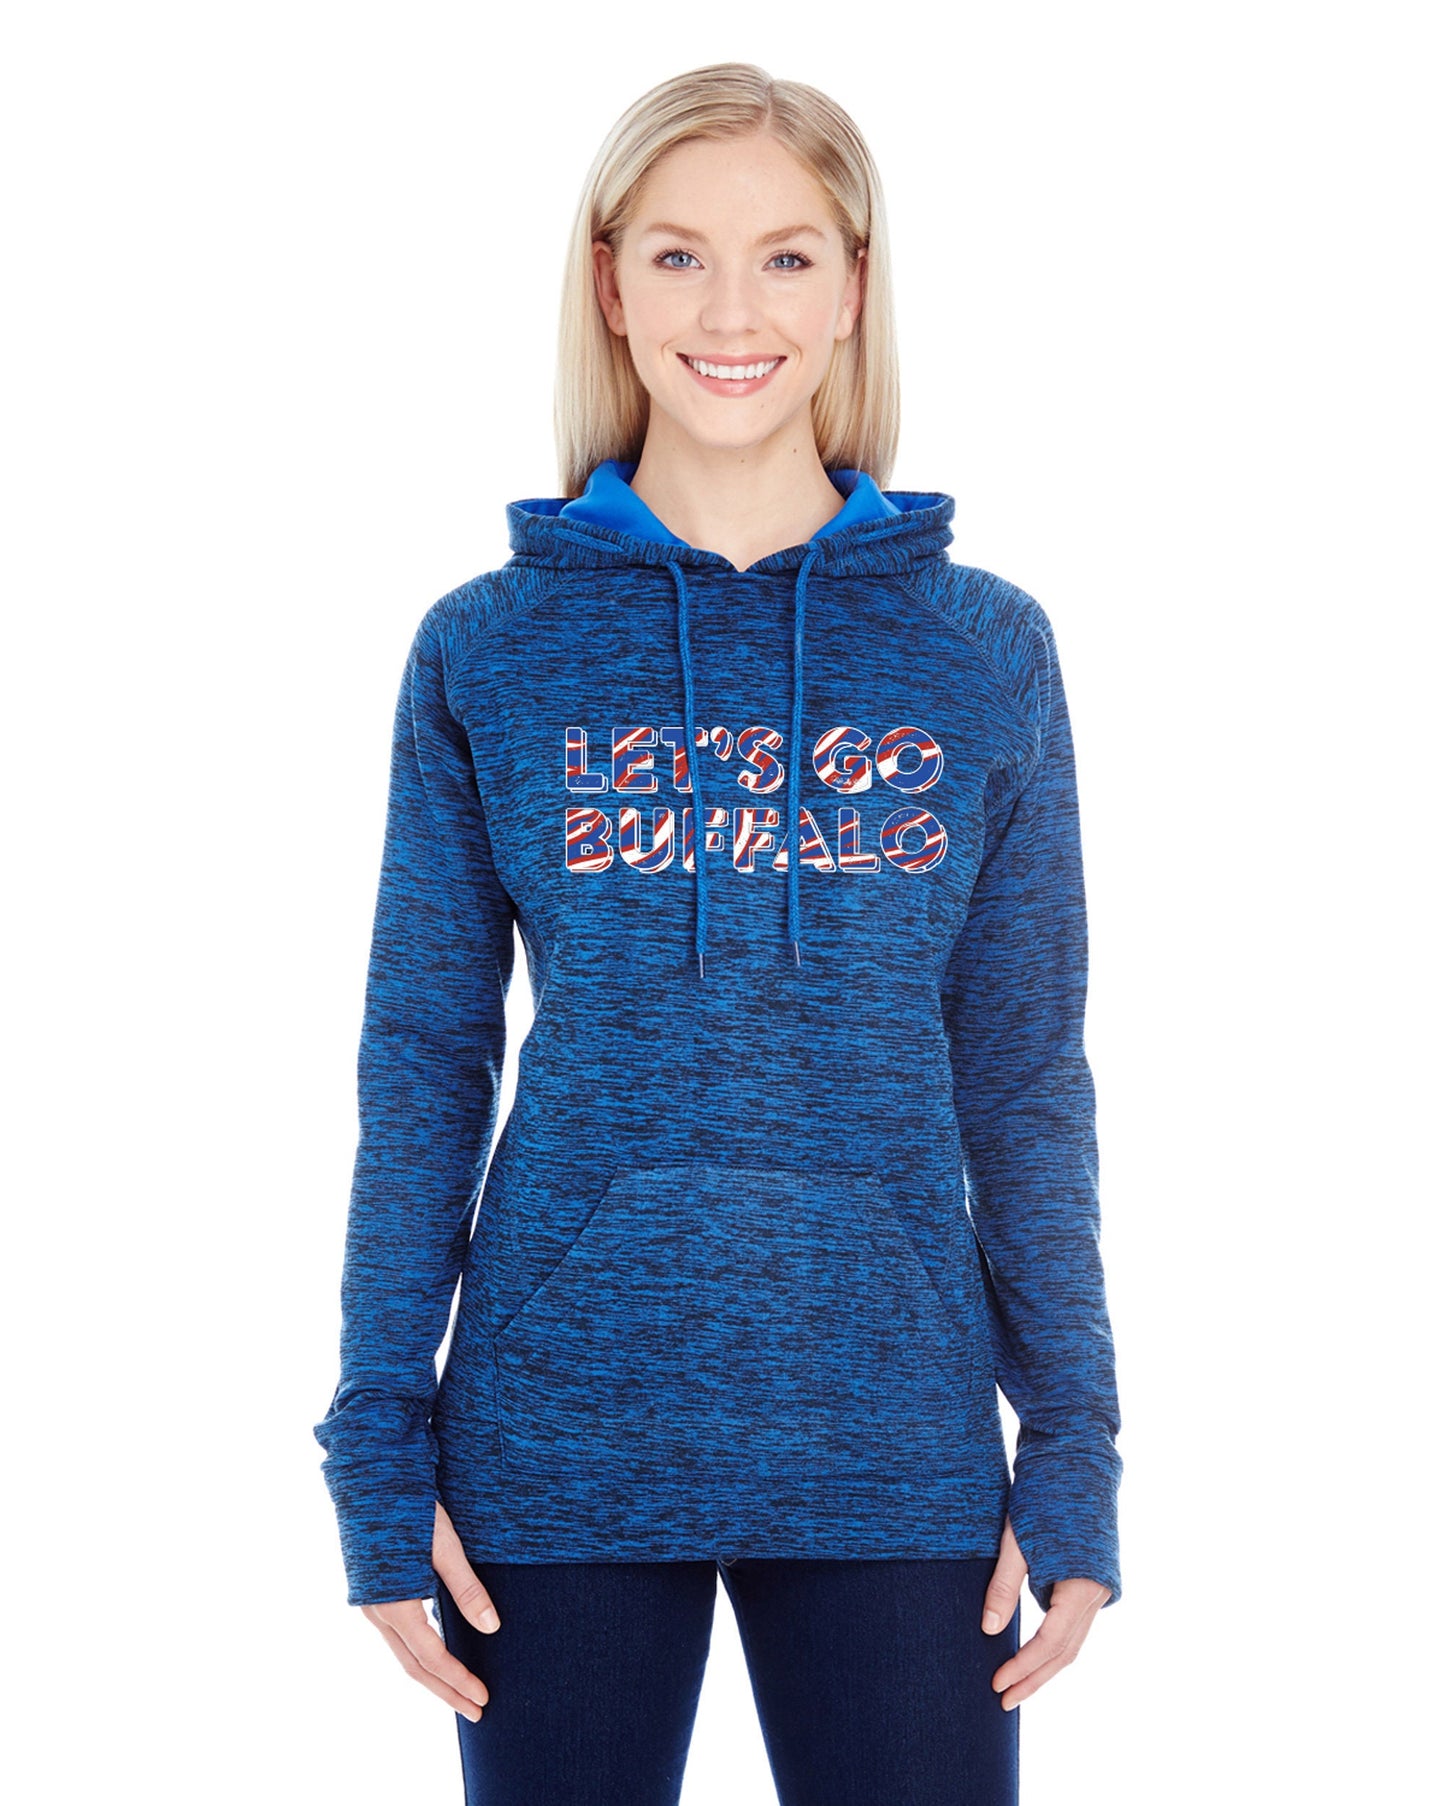 Buffalo hoodie | Let's Go Buffalo!